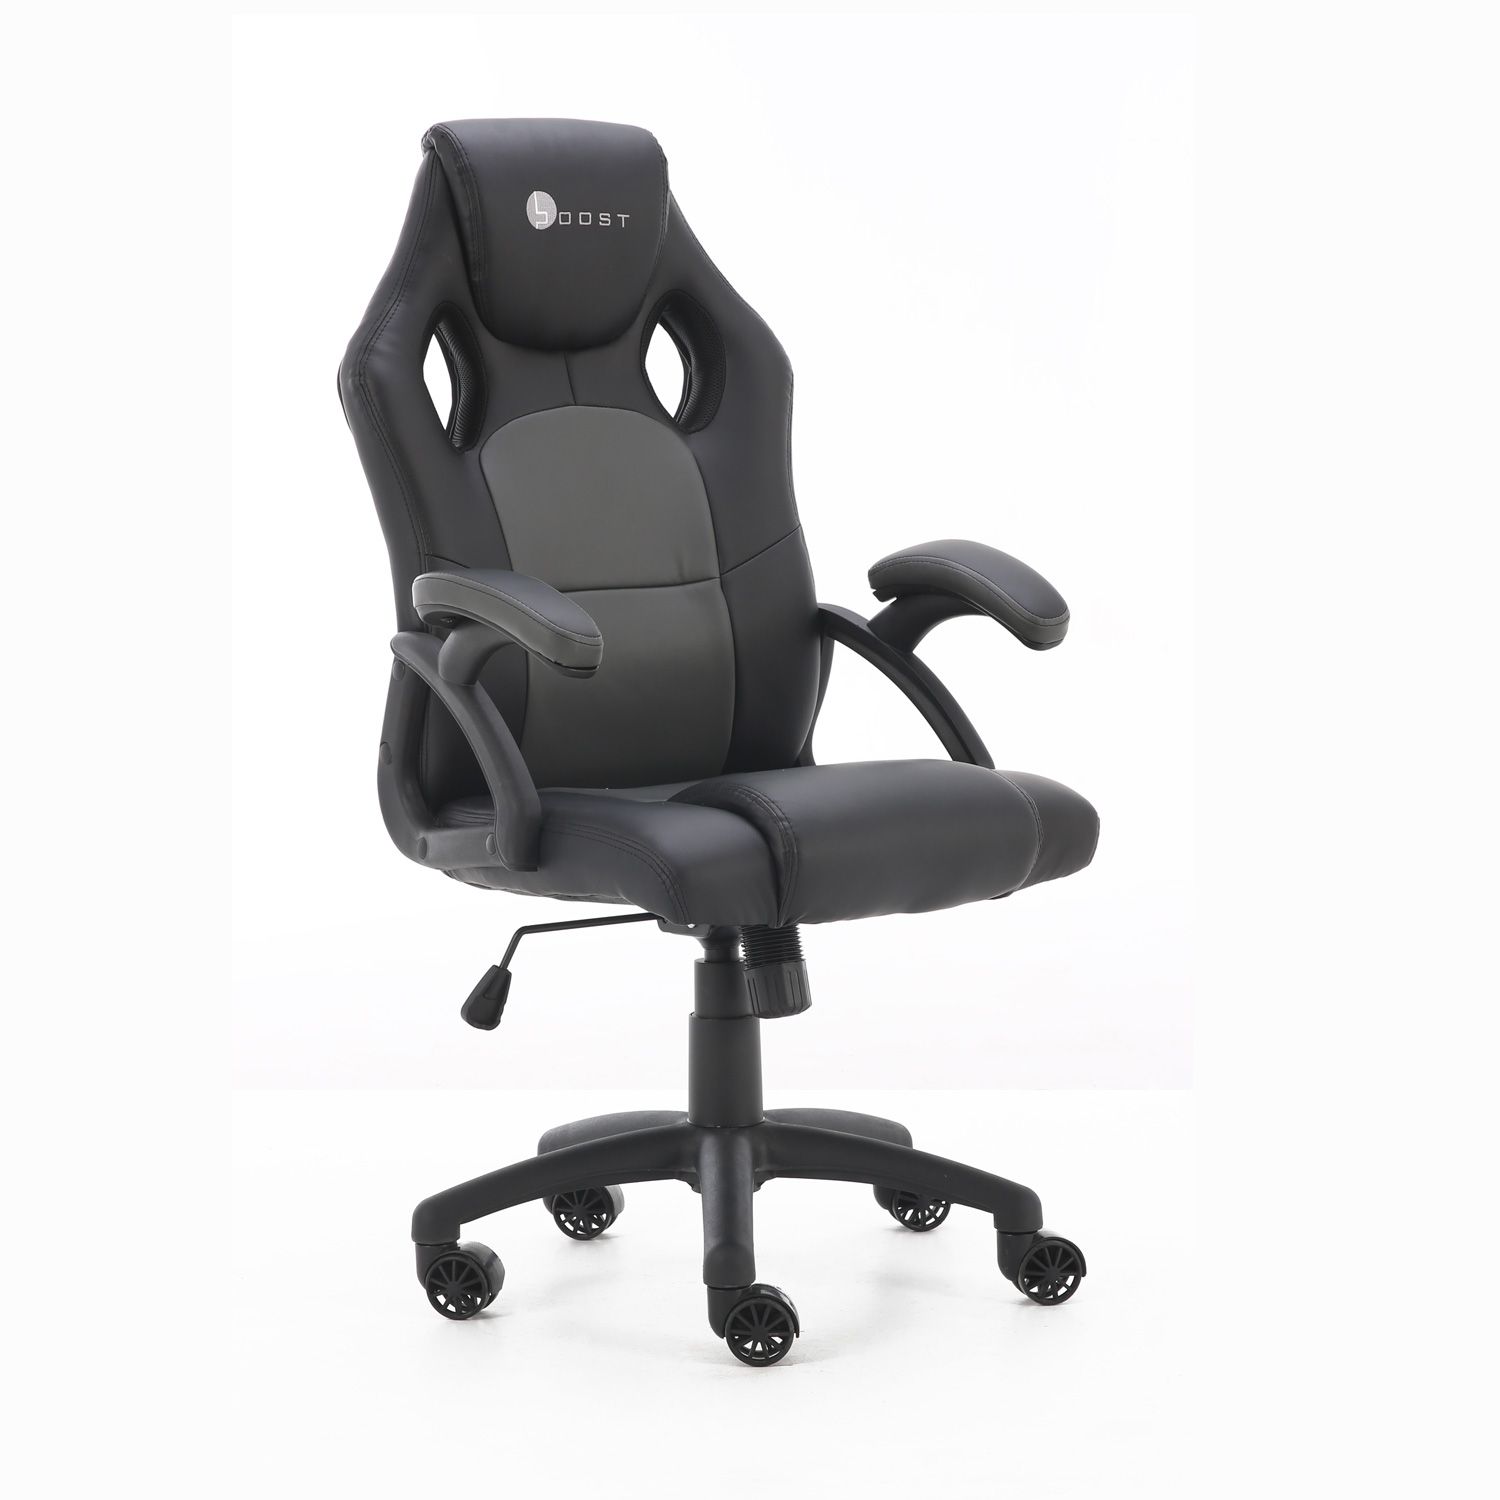 GC-305 Mid-Back Height Adjustable Ergonomic Gaming Chair (Storm Gray/Black)